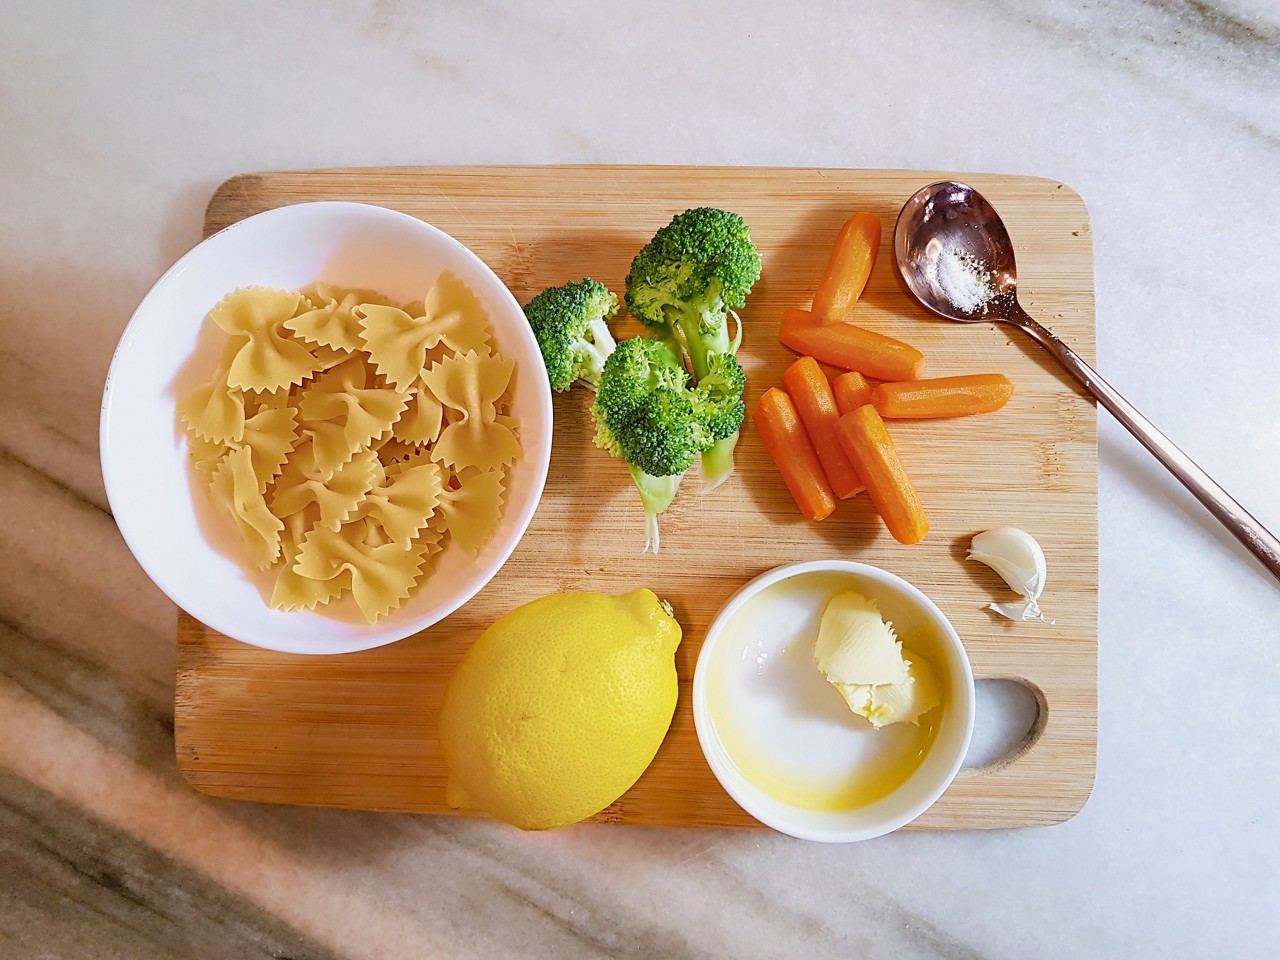 Broccoli carrot pasta ingredients